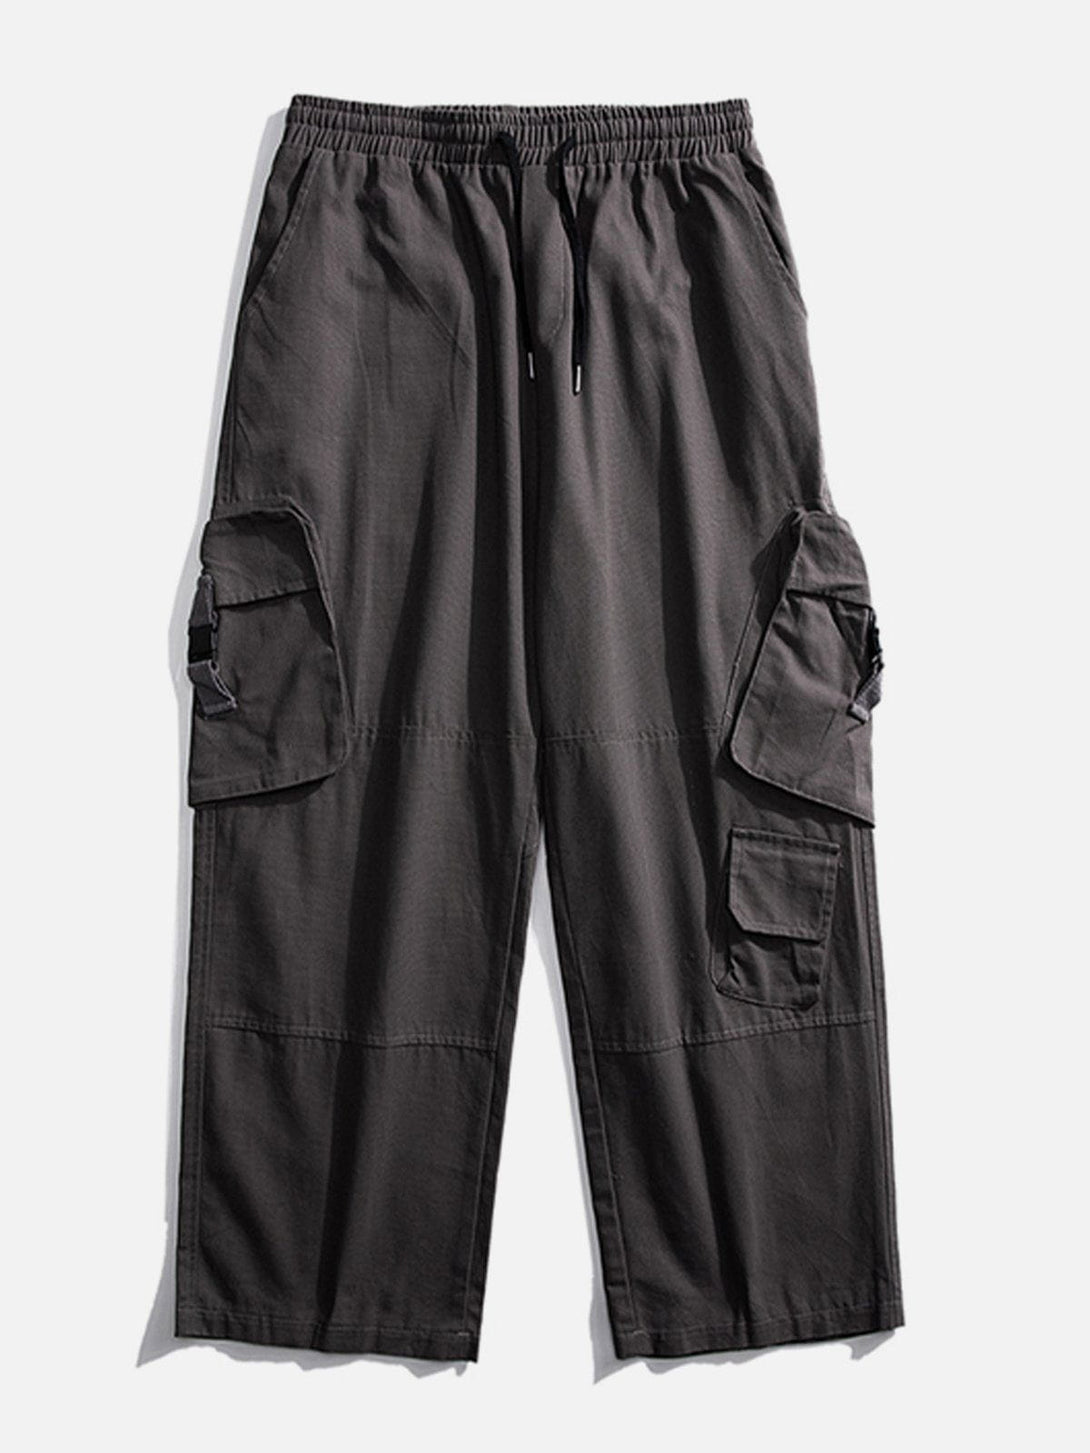 Majesda® - Tilt Bag Buckle Pocket Cargo Pants outfit ideas streetwear fashion